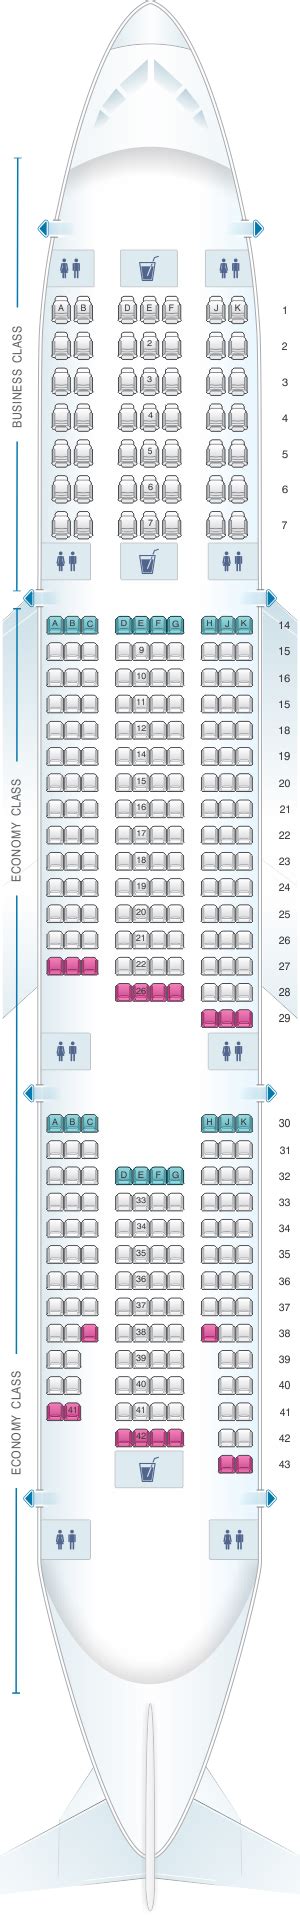 Plan De Cabine Emirates Boeing B777 200lr V2 Seatmaestrofr